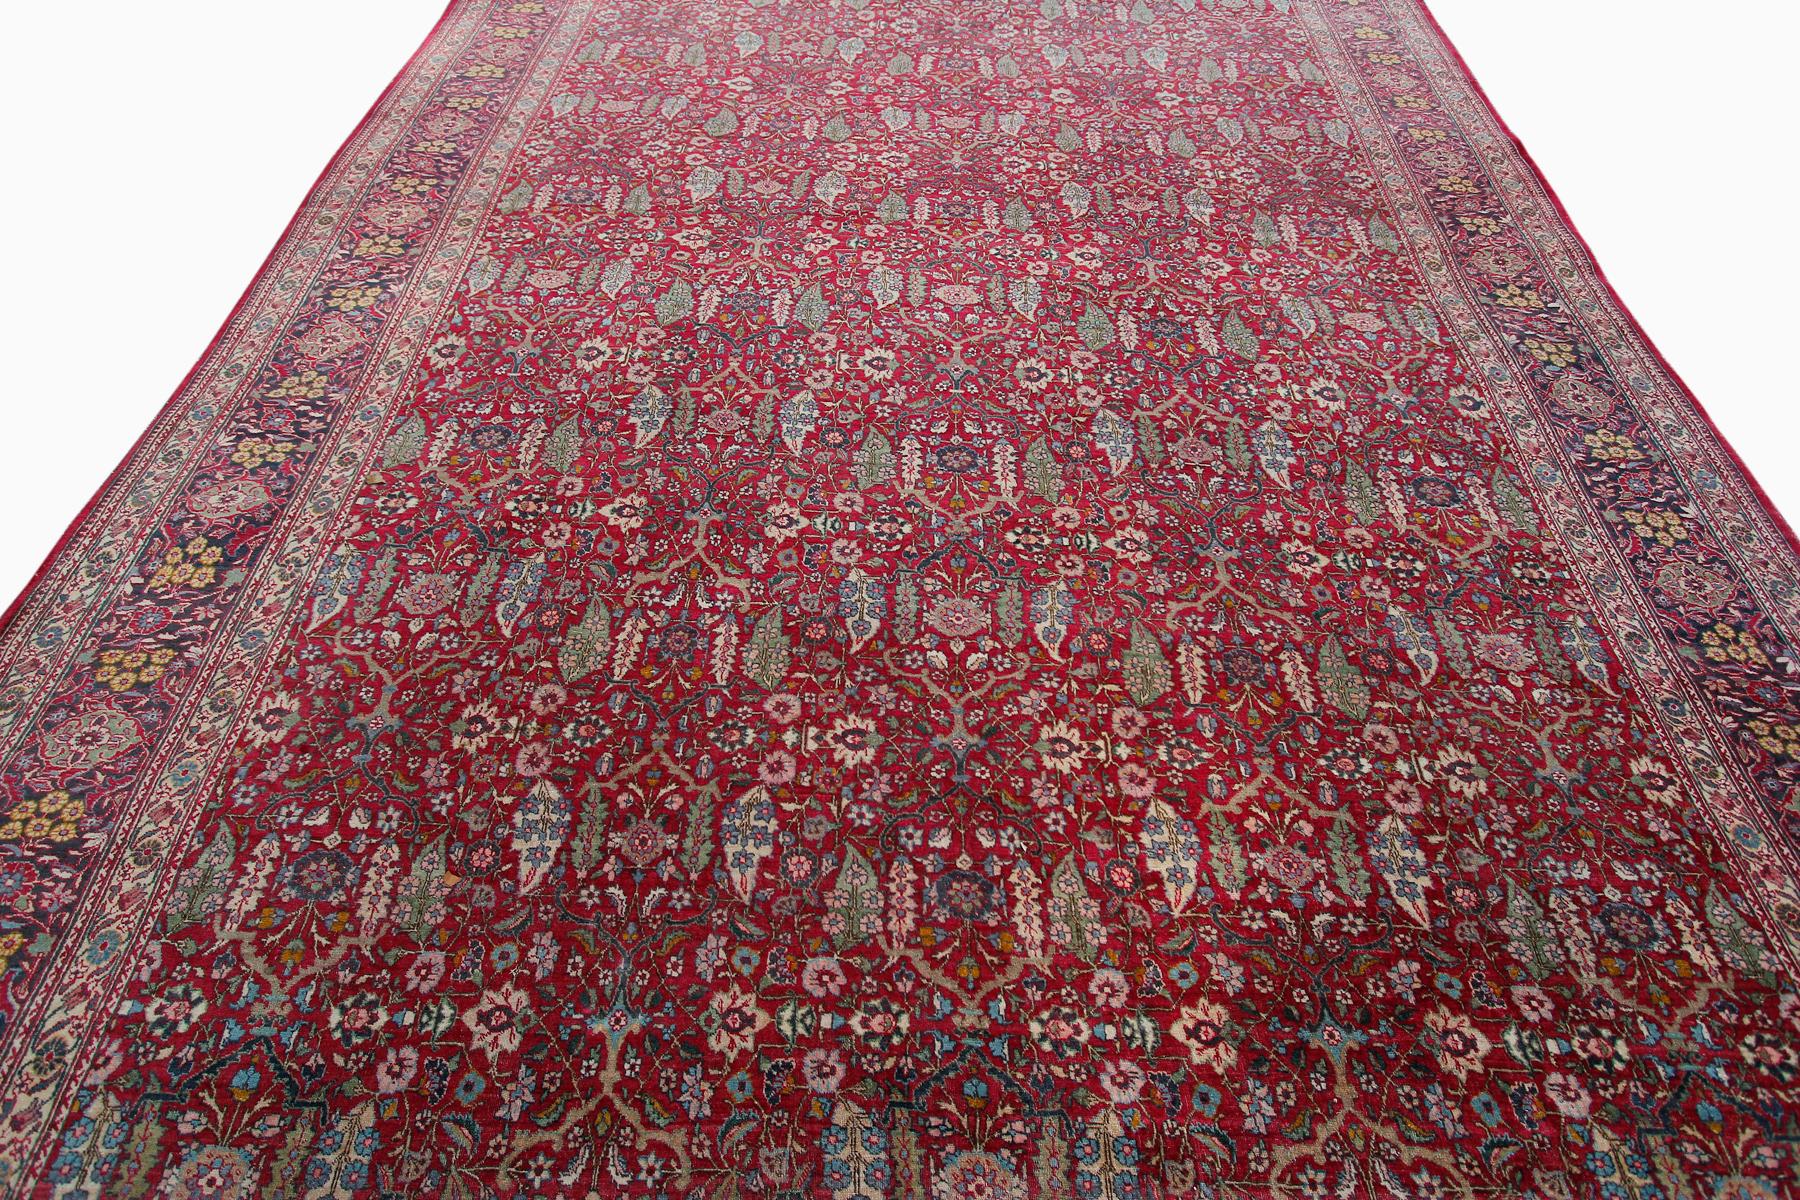 Fine Tabriz rug rare Haji Jalili leaf design incredible Persian 
Measures: 9'3